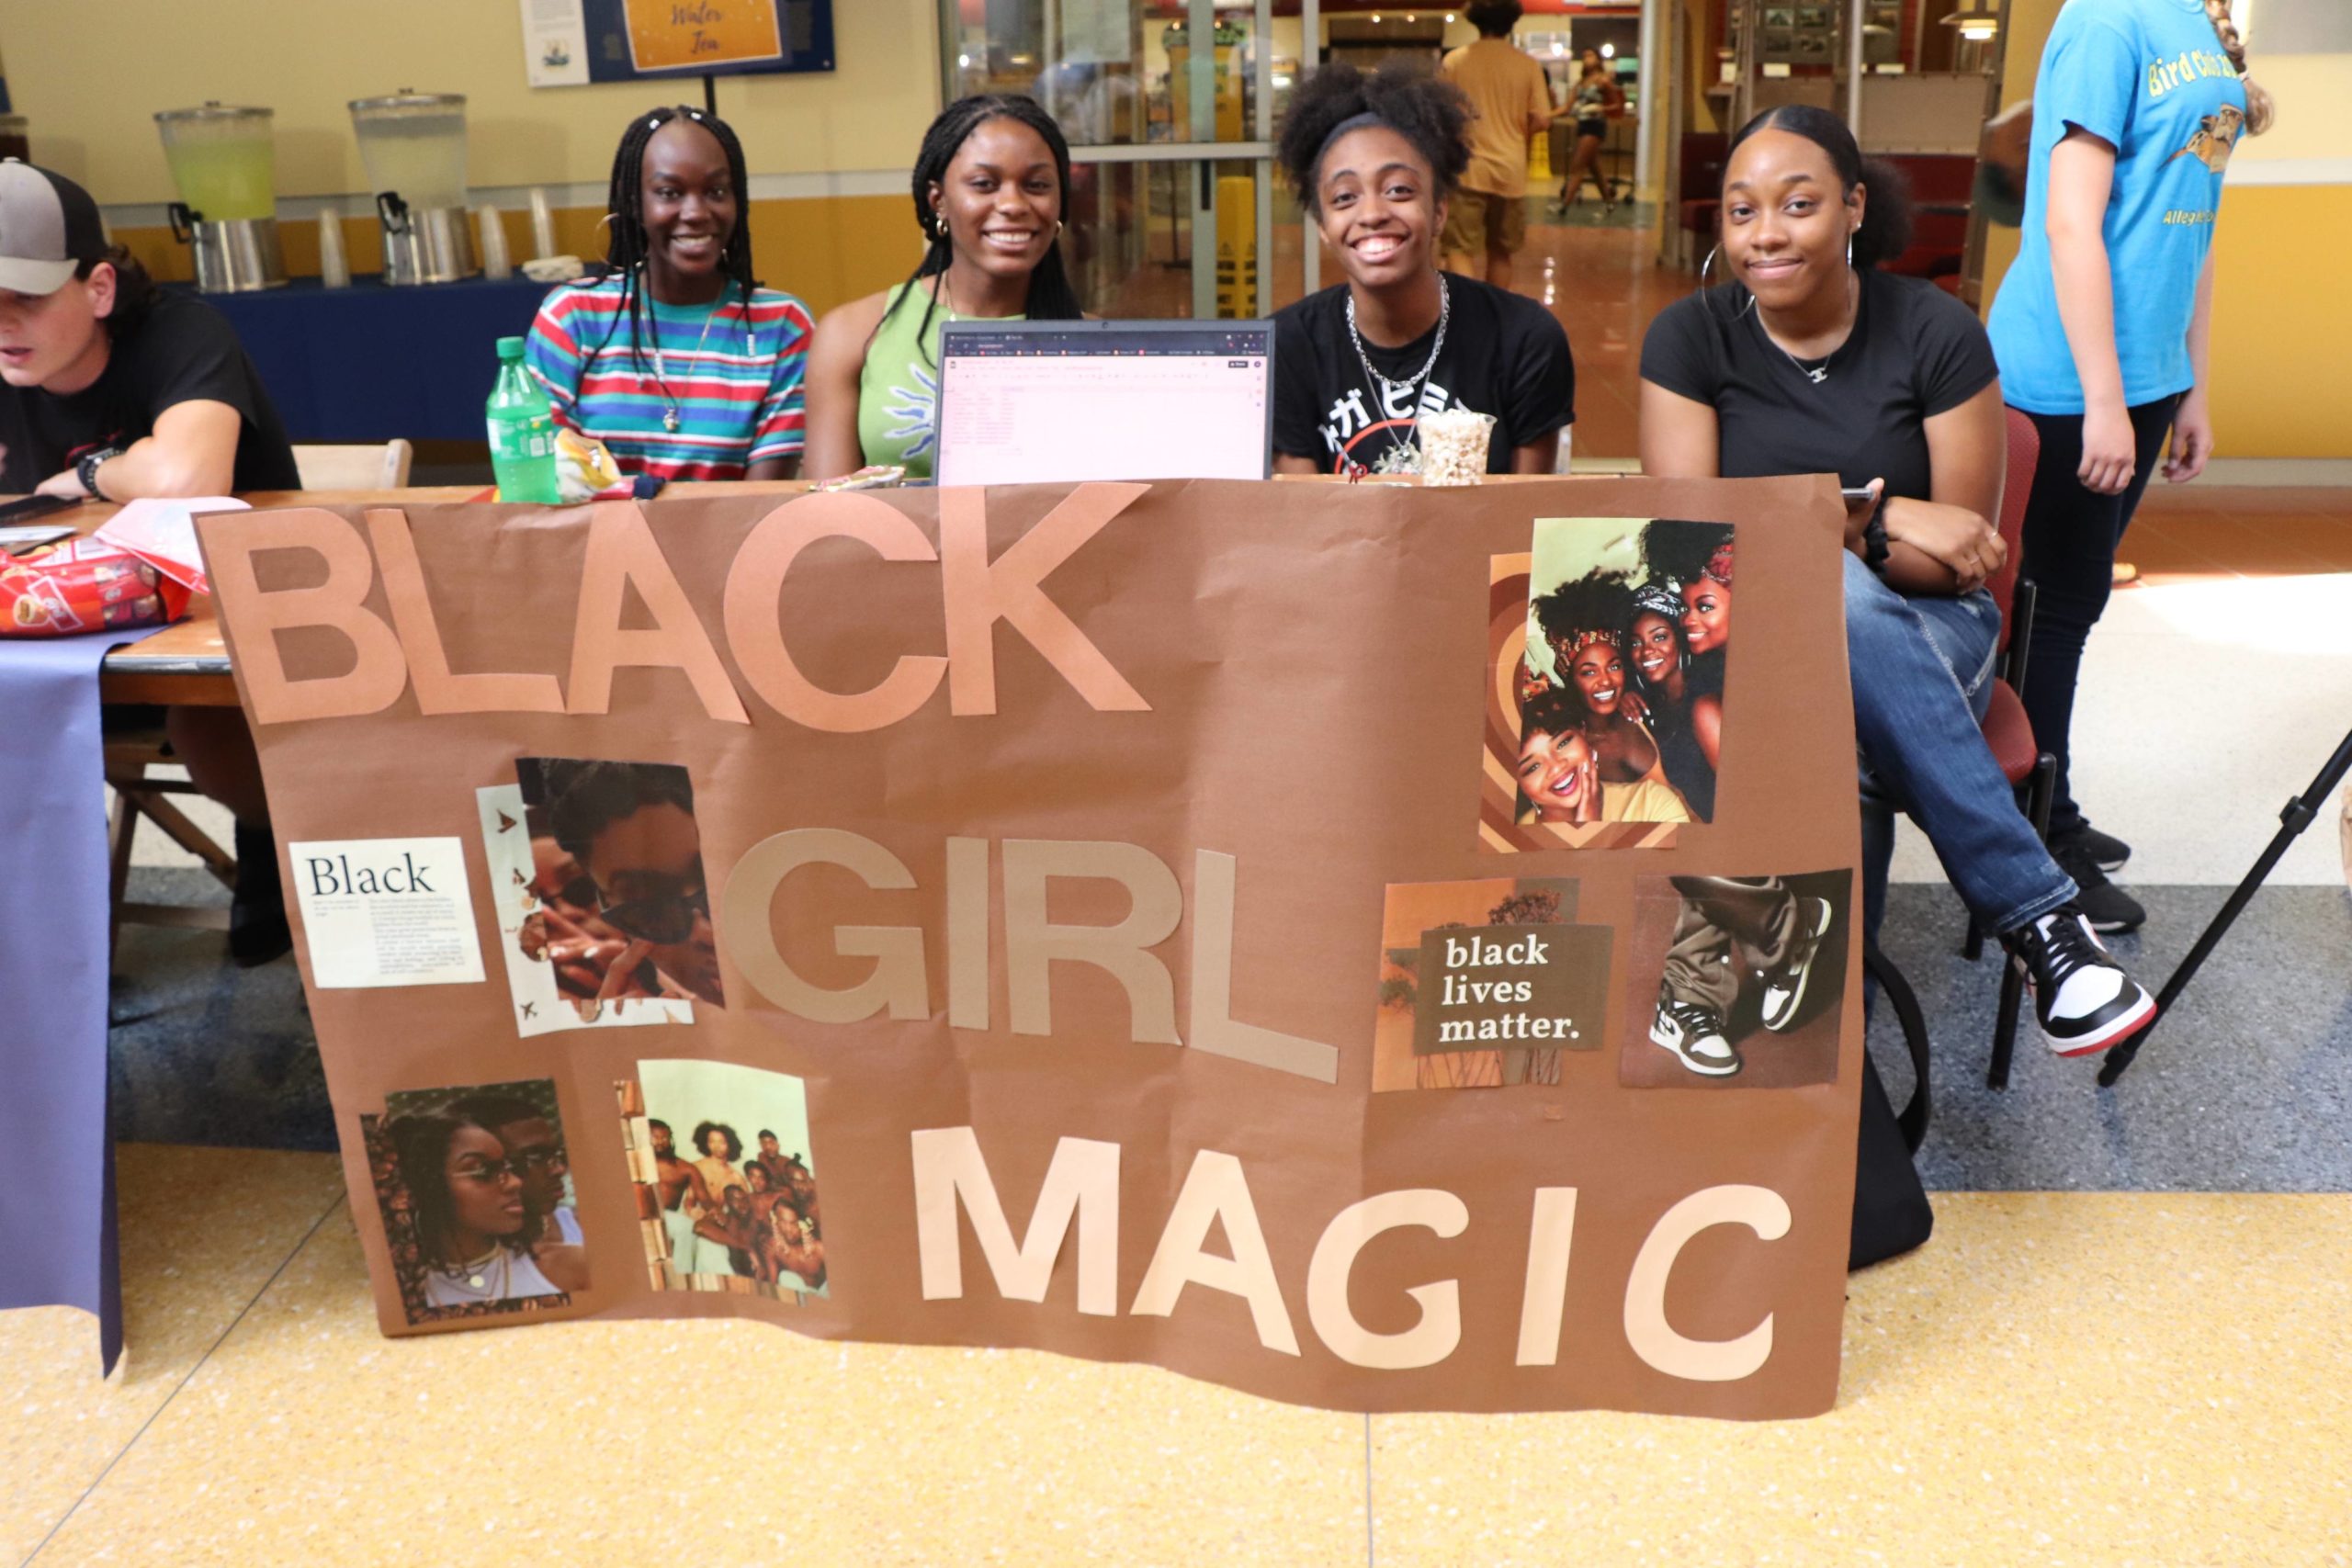 Members of the club Black Girl Magic posing at a club showcase